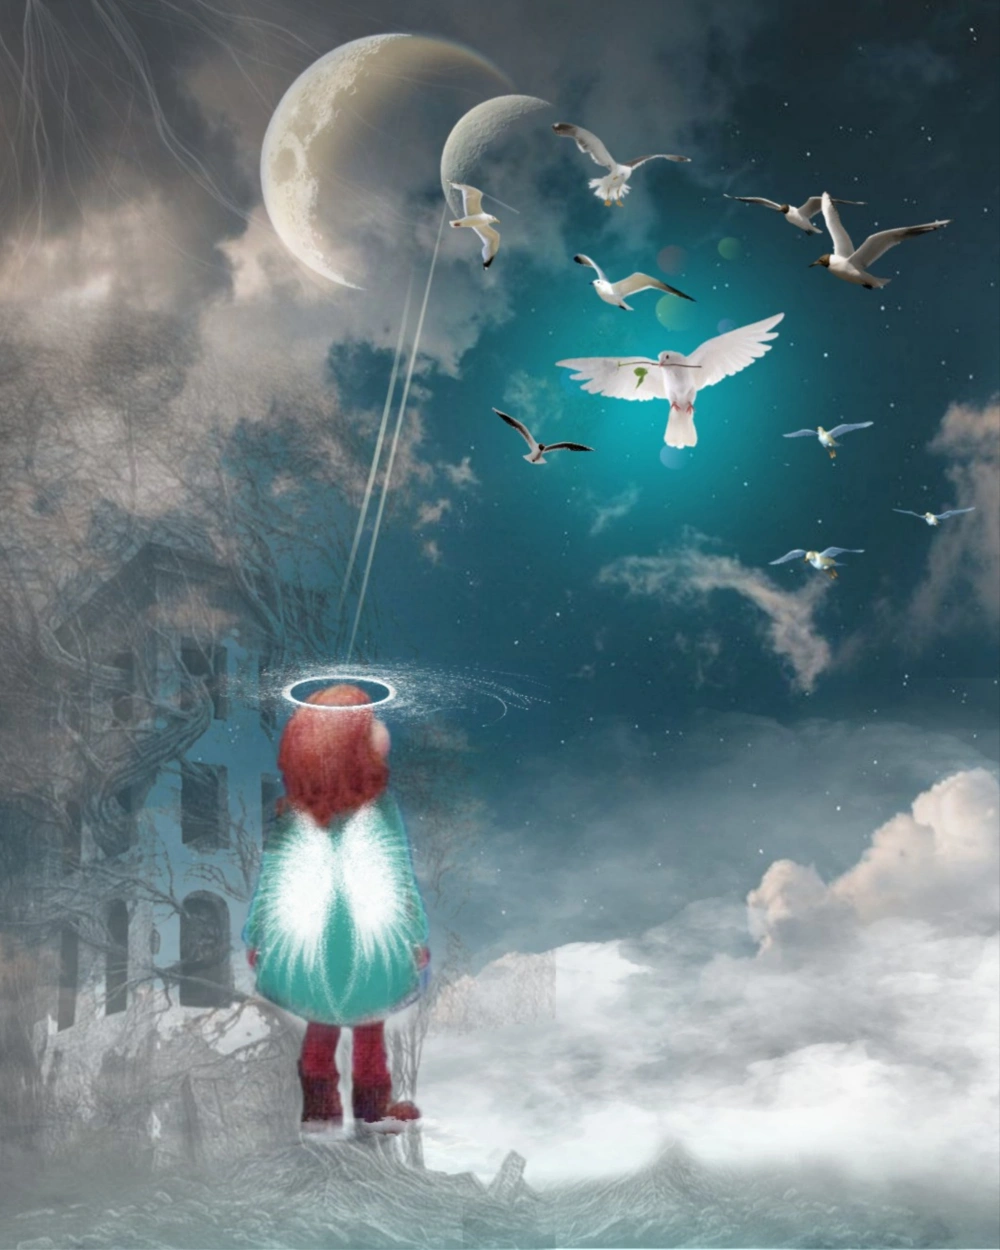 #sky#clouds#moon#girl#angel#fantasy#
#drawart#art#birds#myediting#
#mystickers#